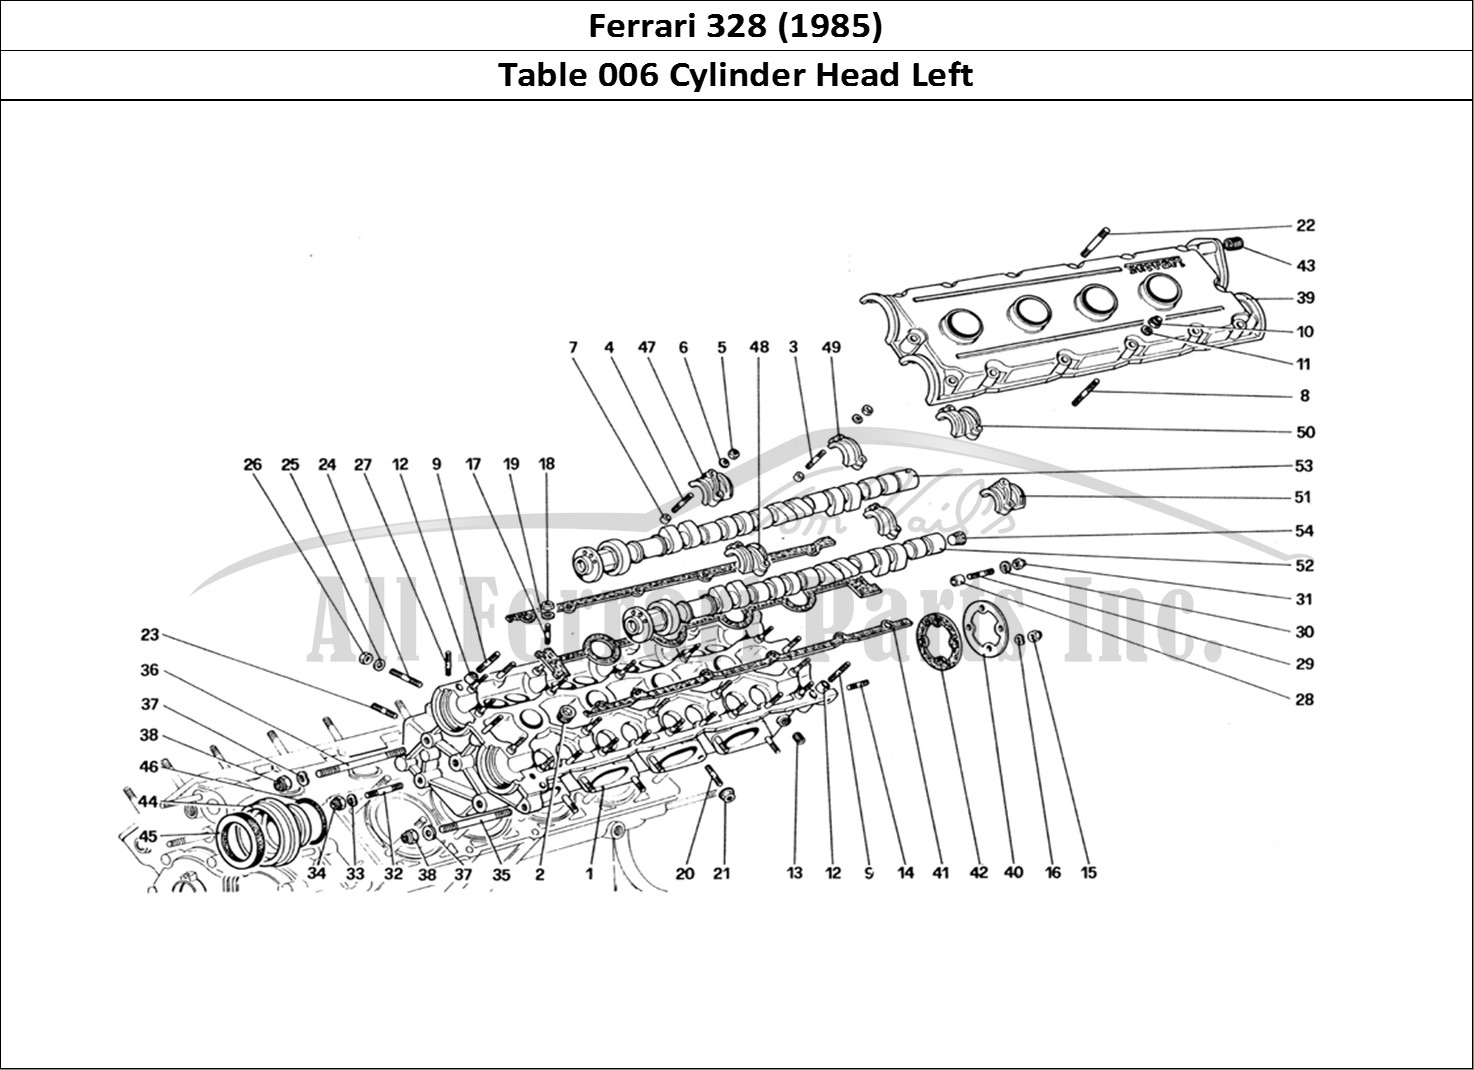 Ferrari Parts Ferrari 328 (1985) Page 006 Cylinder Head (Left)